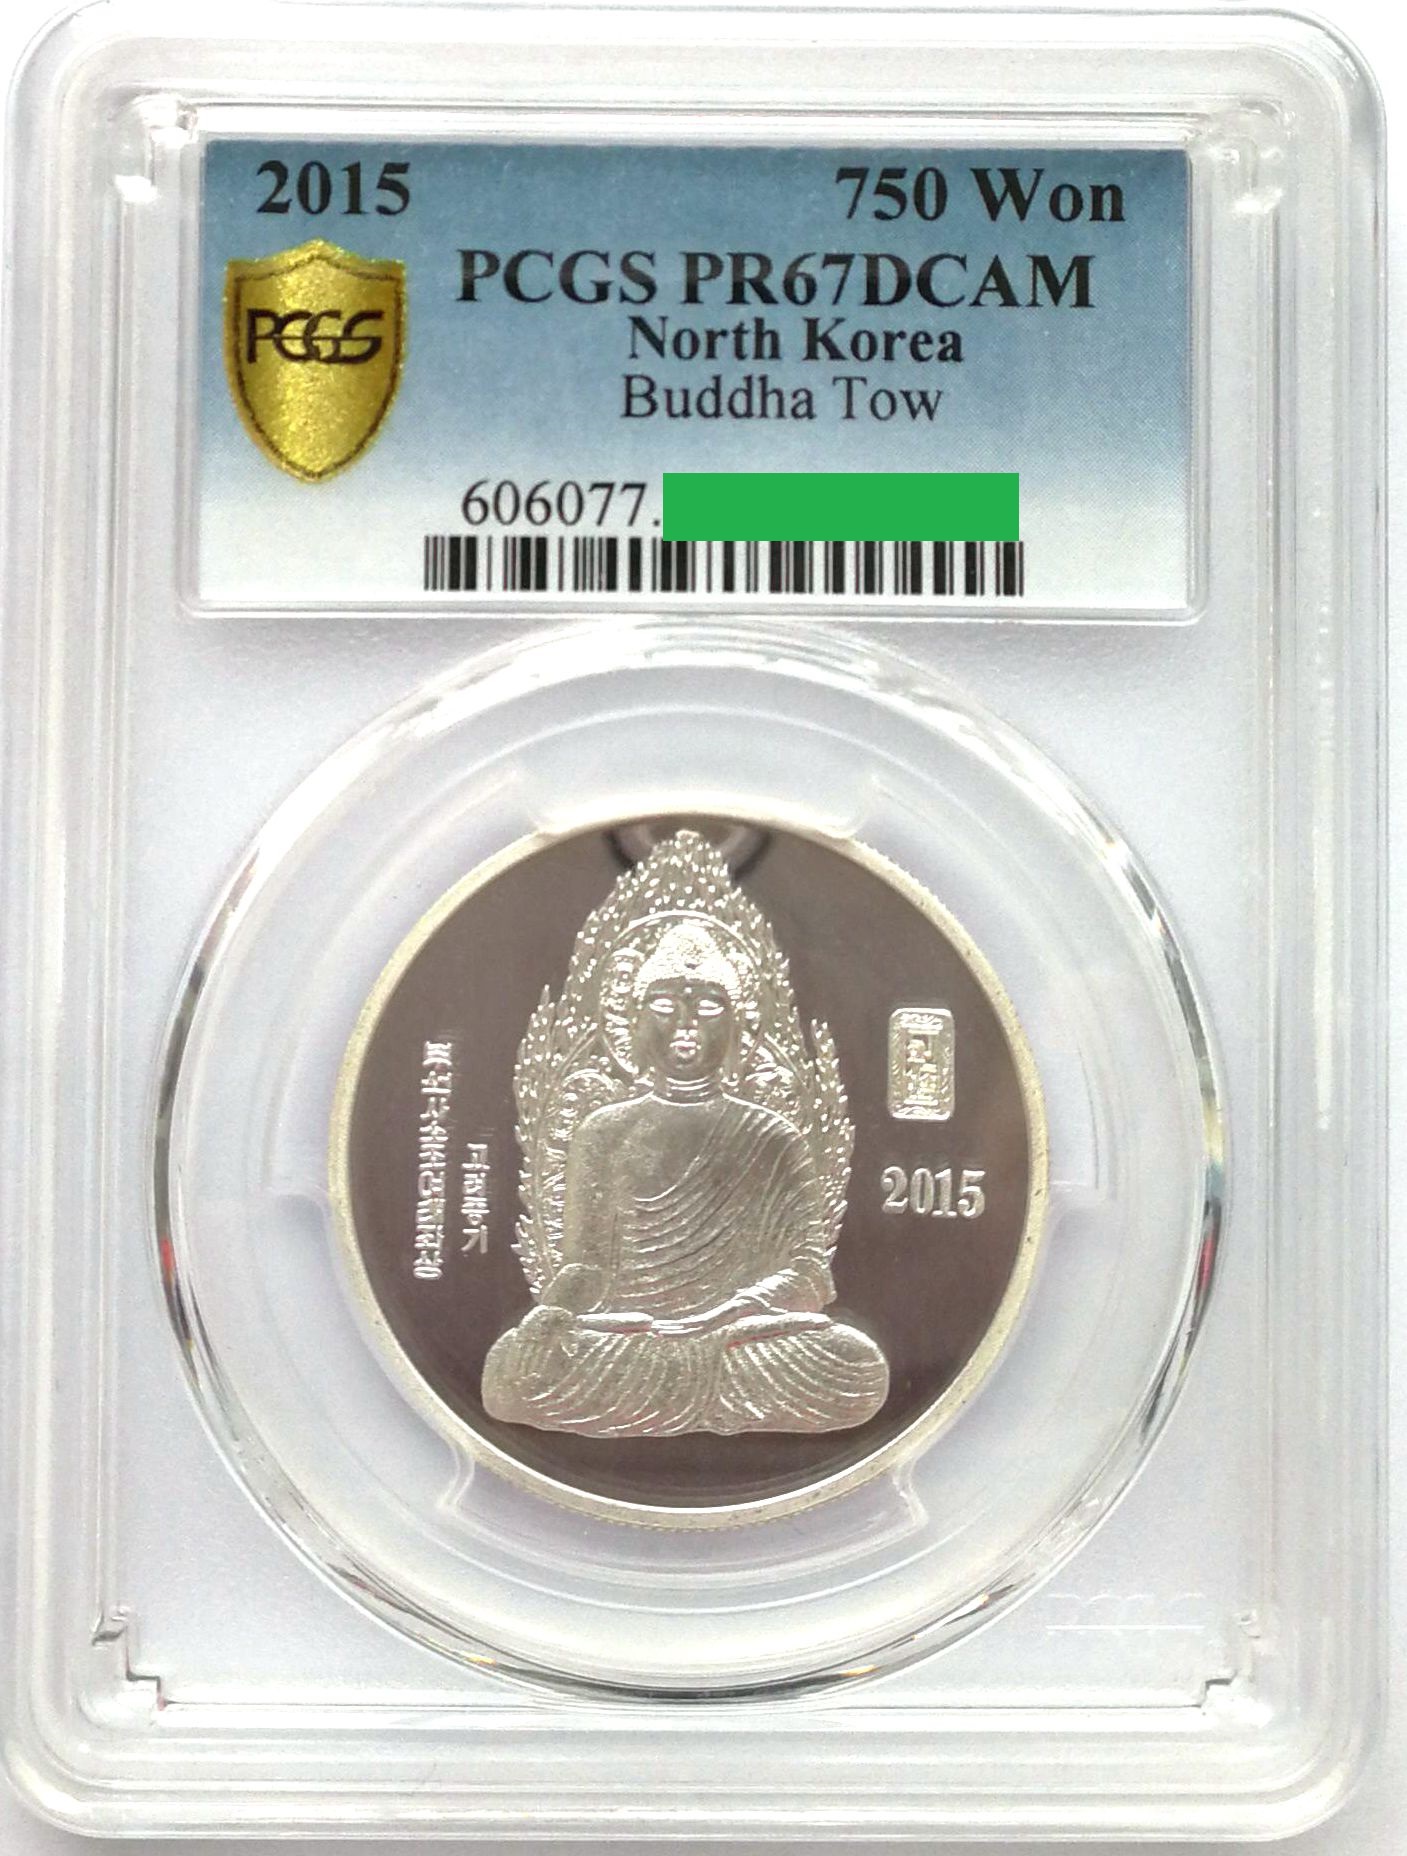 L3467, Korea Buddhism Silver Coin, Sakyamuni 0.5 Ounce, 750 Won, 2015 PCGS PR67DCAM